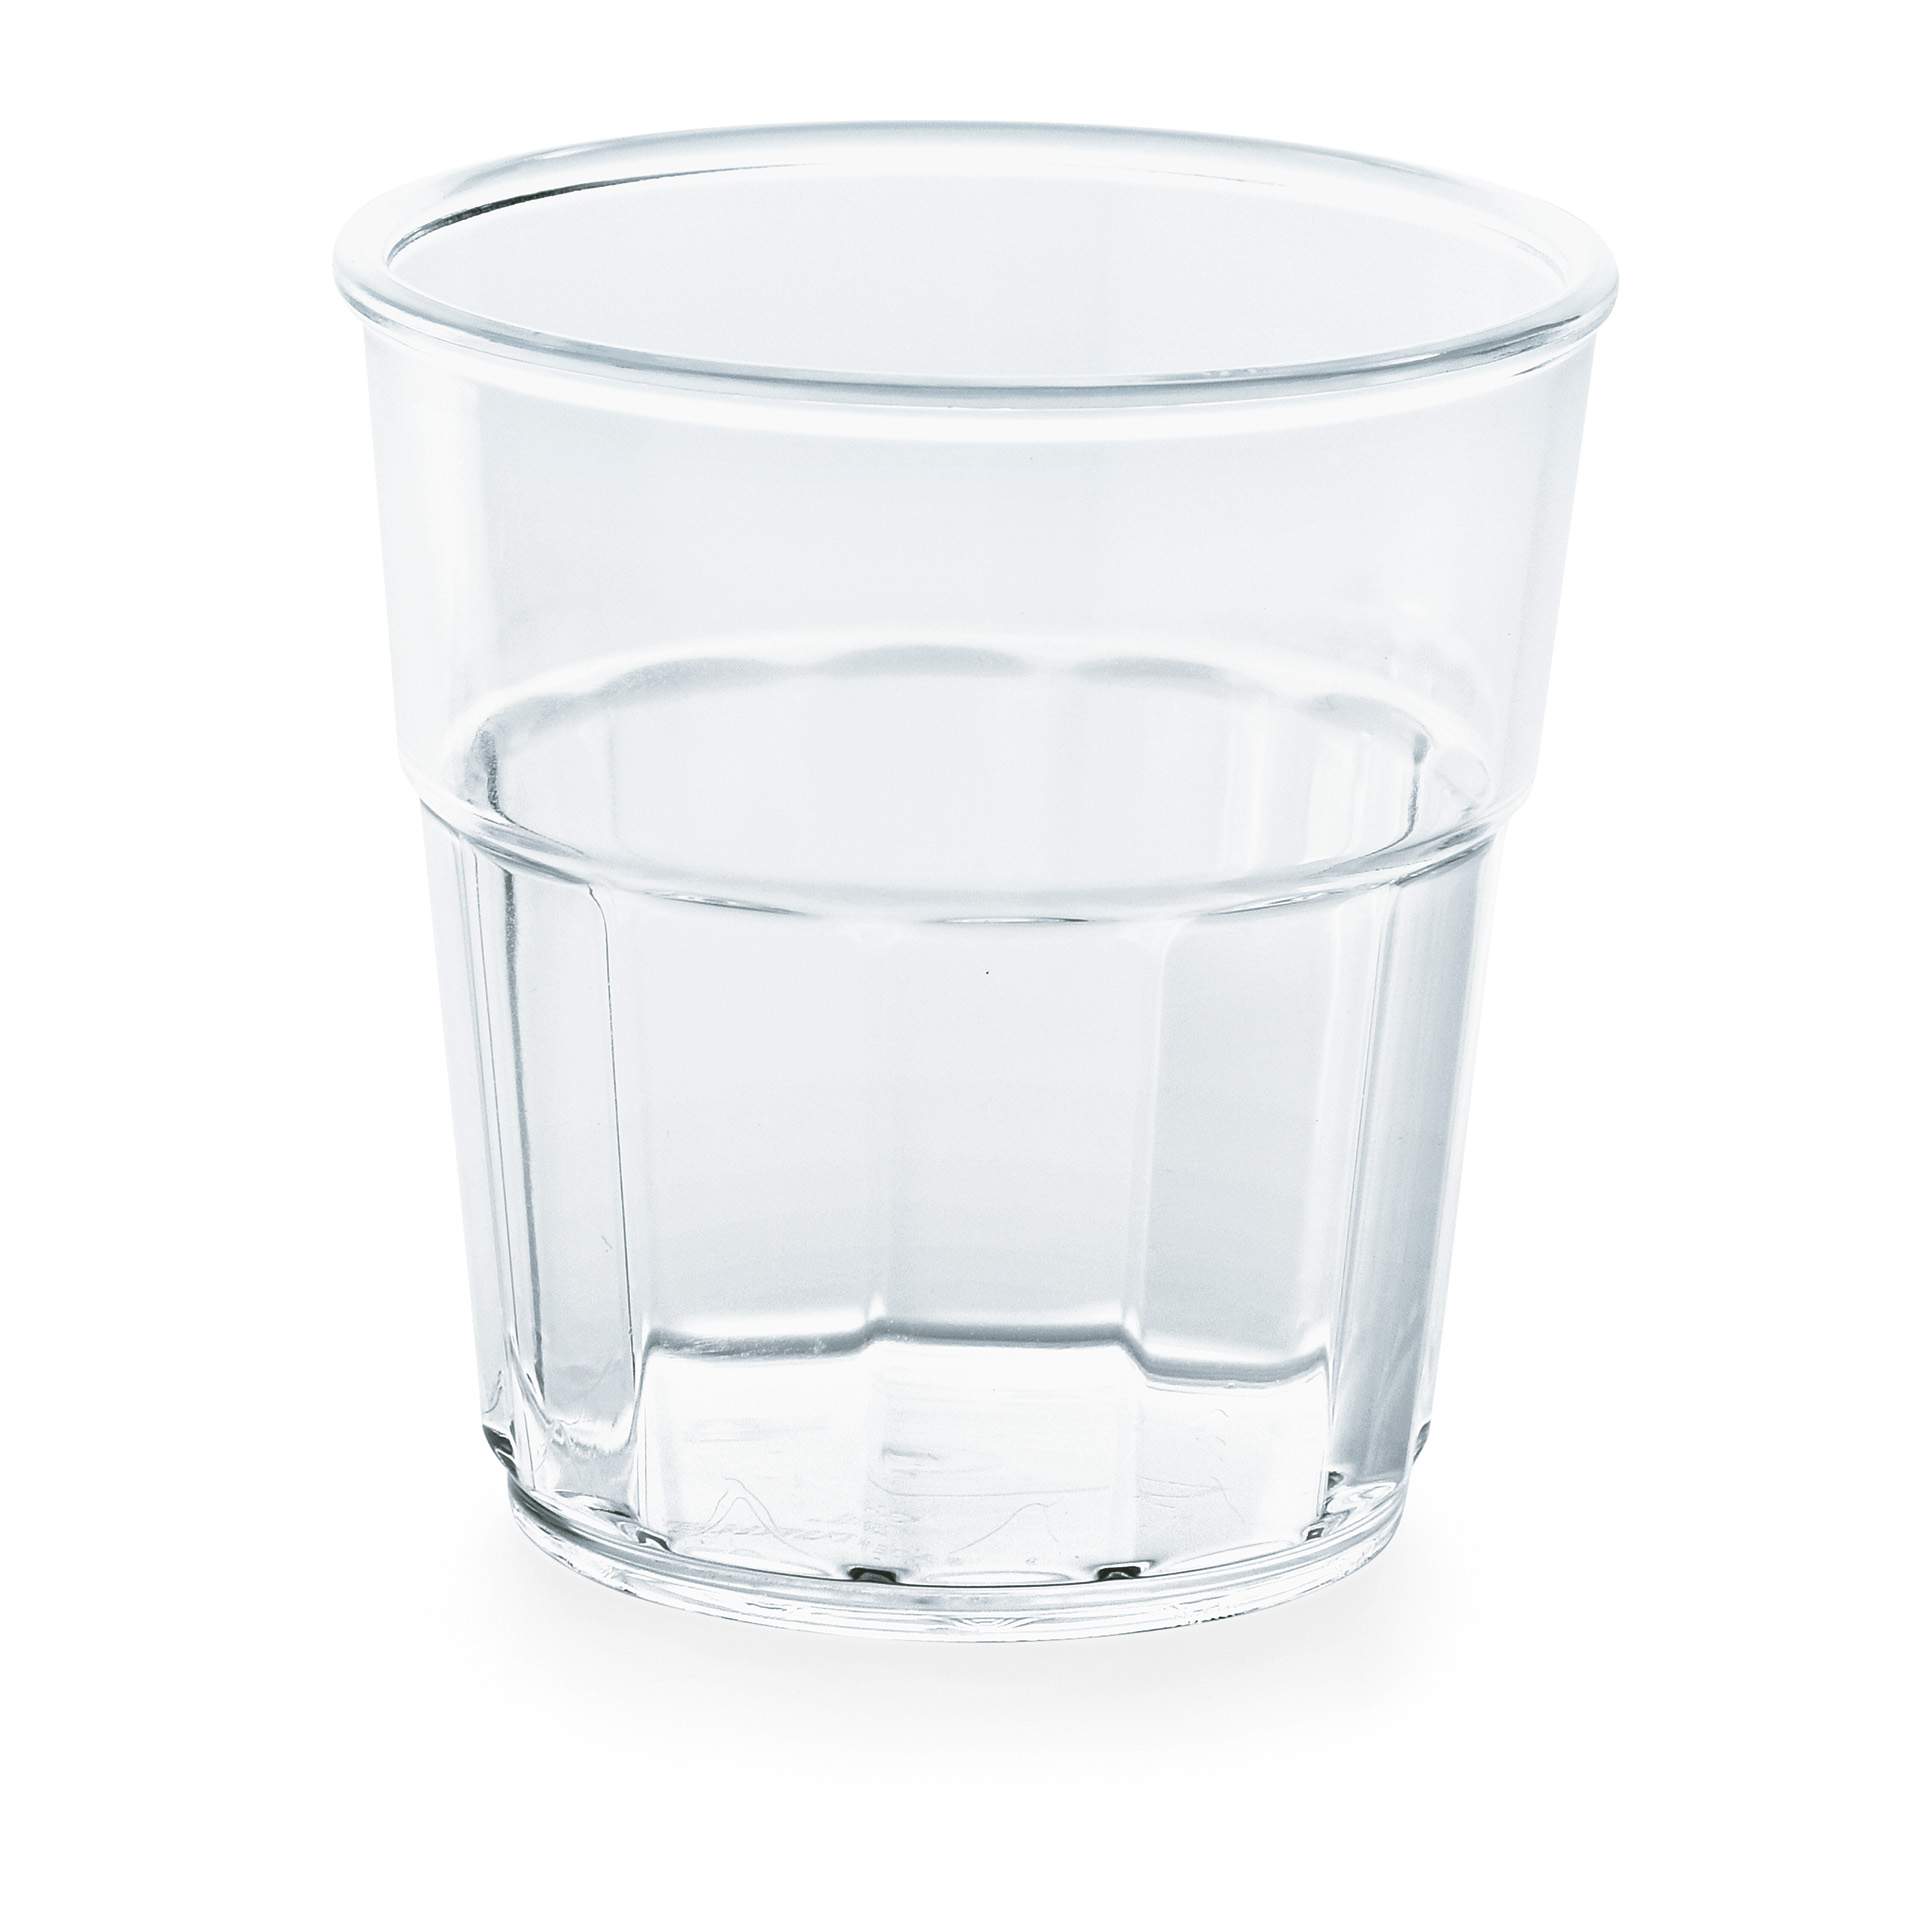 Trinkglas - Abm. 8,0 x 8,4 cm - Inhalt 0,25 l - Polycarbonat - 9457025-A